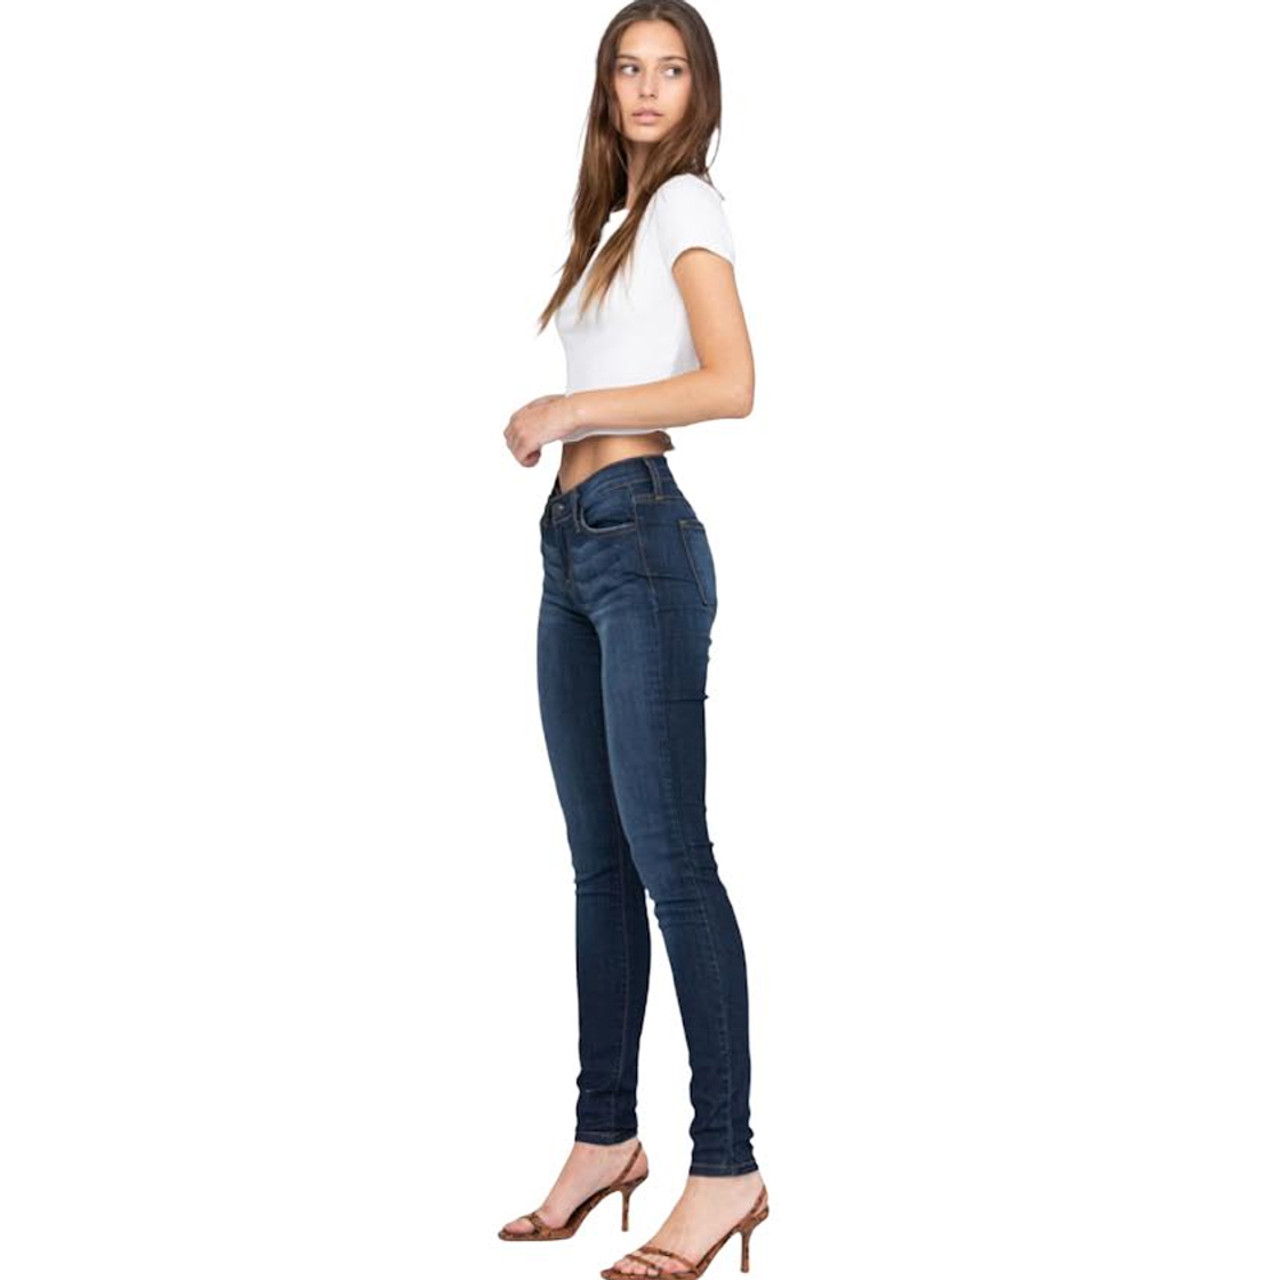 Judy Blue Mid Rise Skinny Fit Raw Hem Jeans Regular to Plus Size